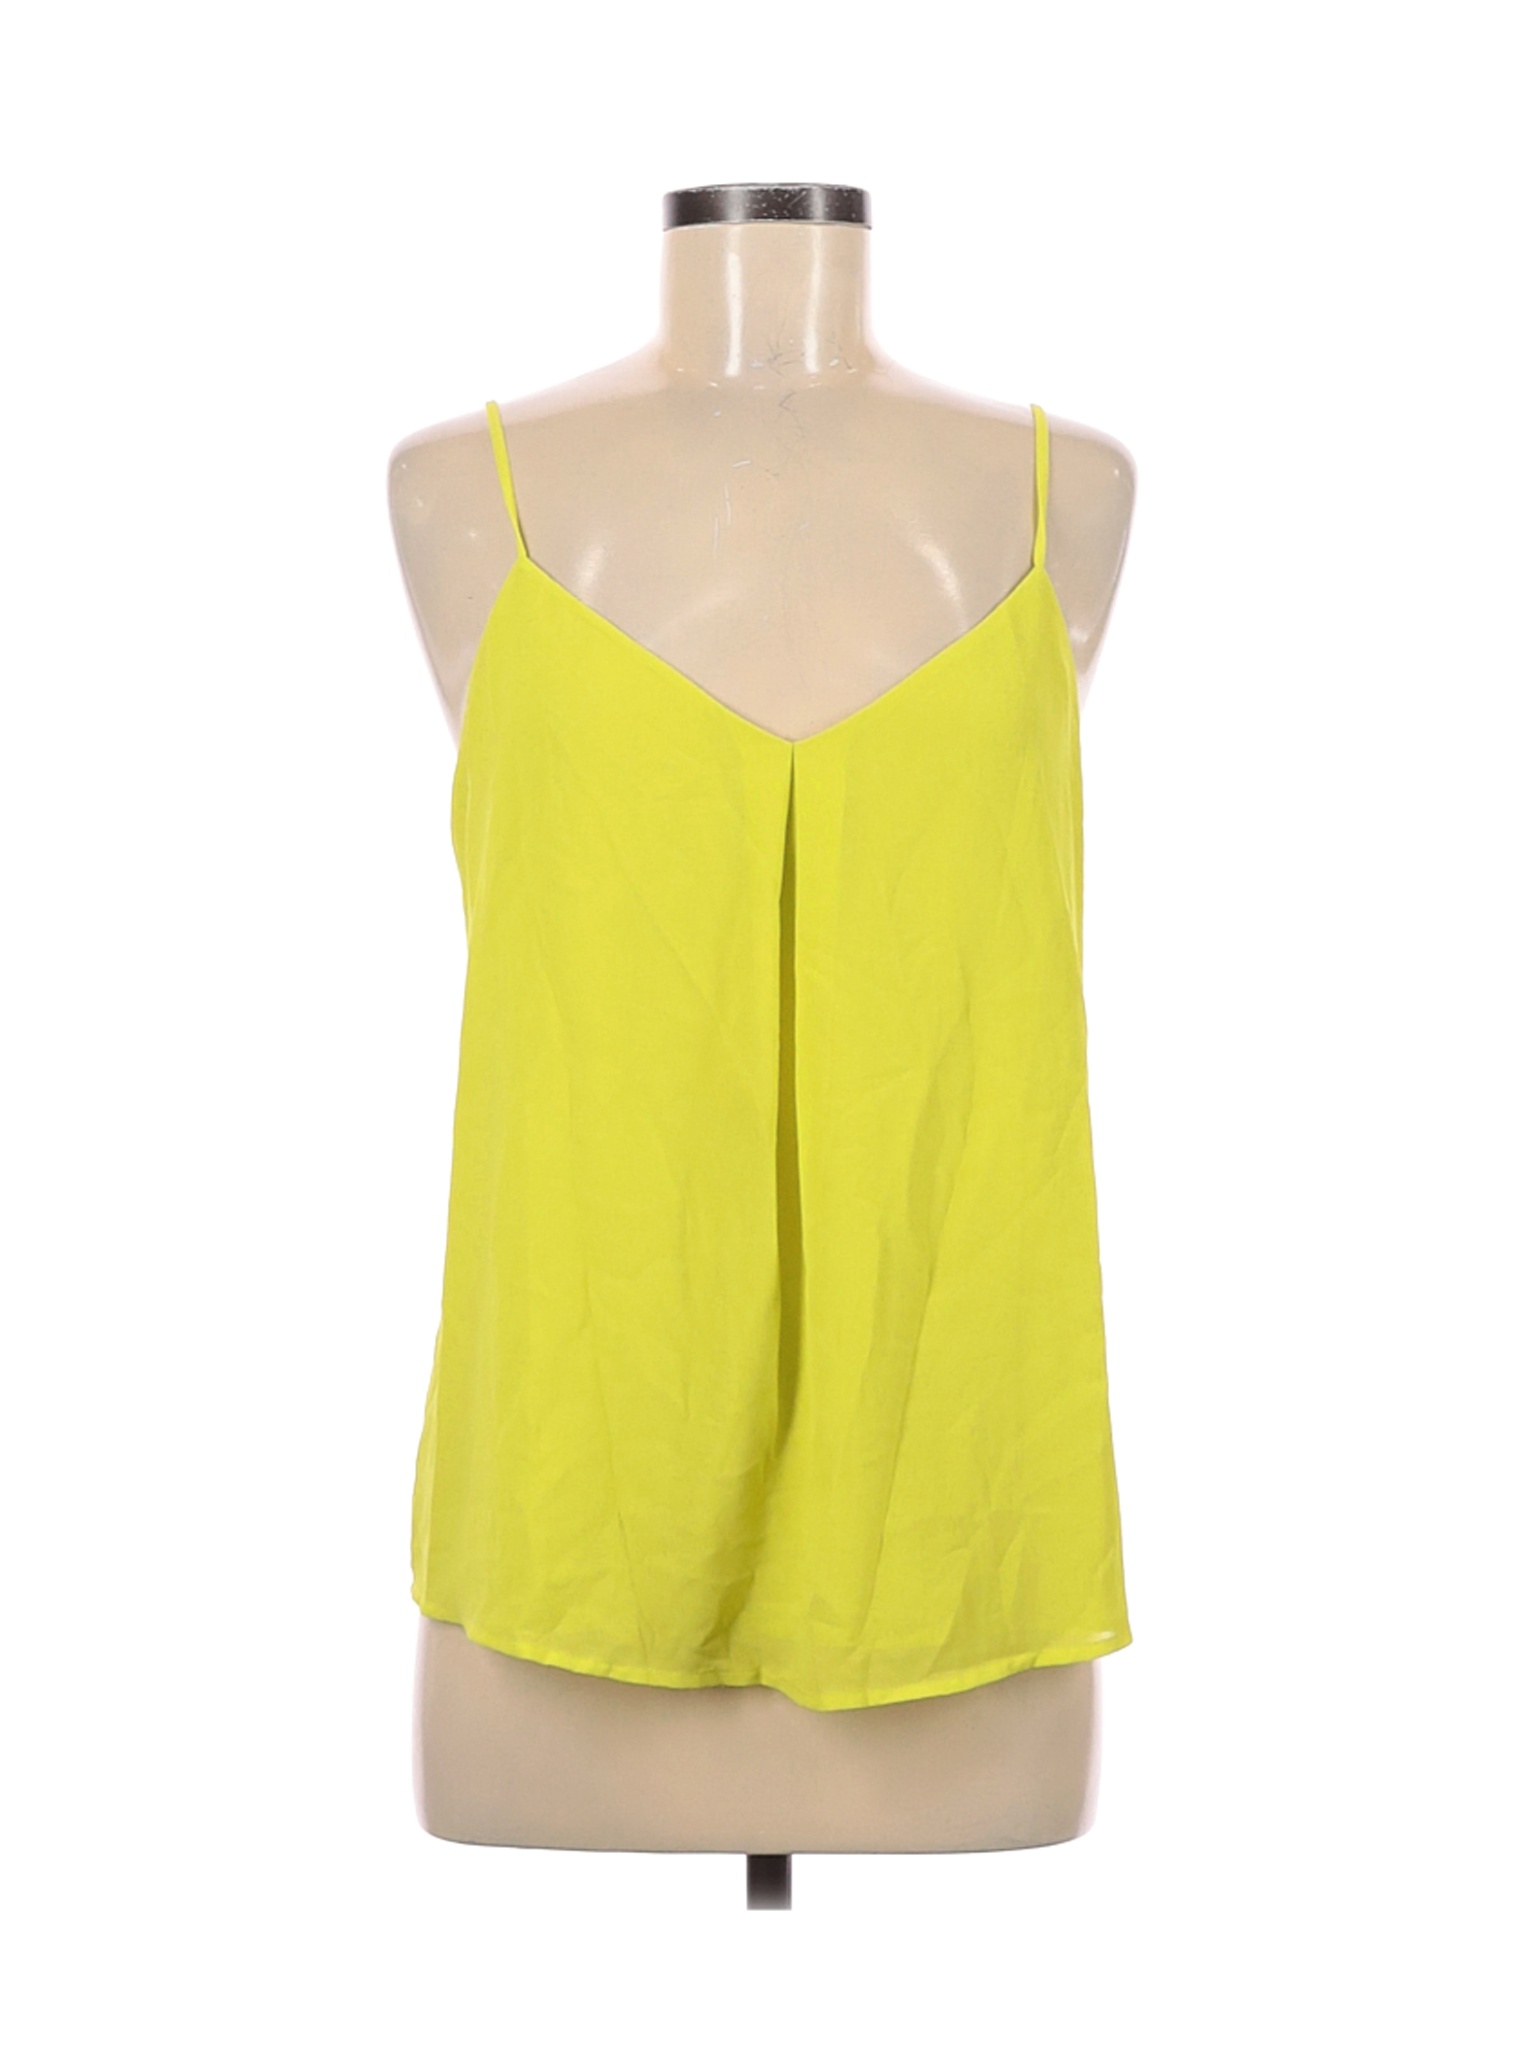 Norah Women Yellow Sleeveless Blouse M | eBay